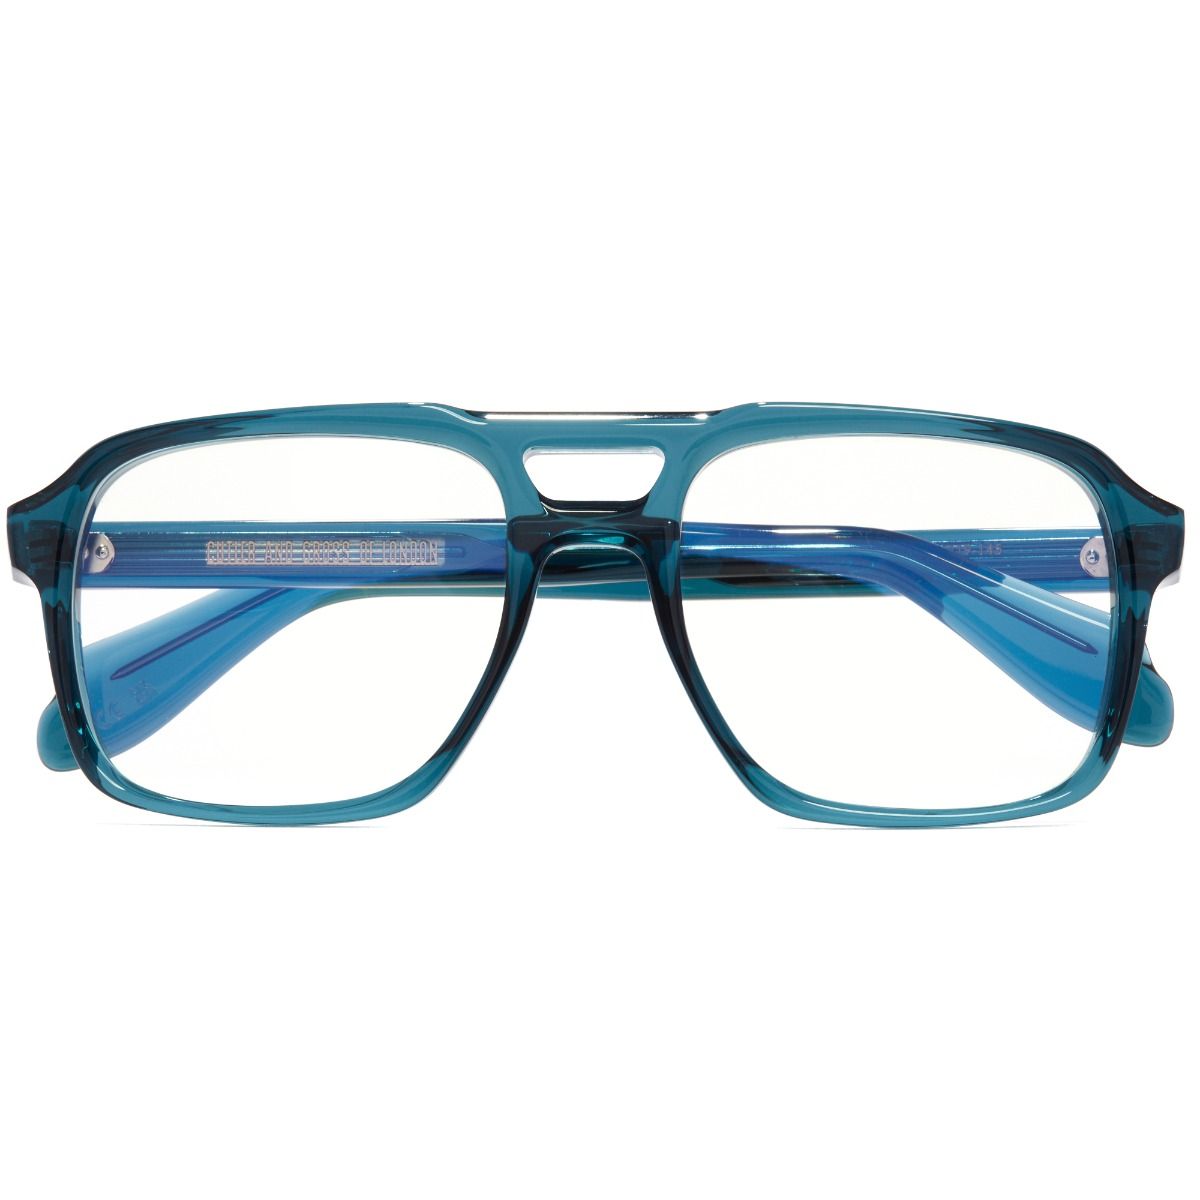 1394 Optical Aviator Glasses (Small) - Tribeca Teal